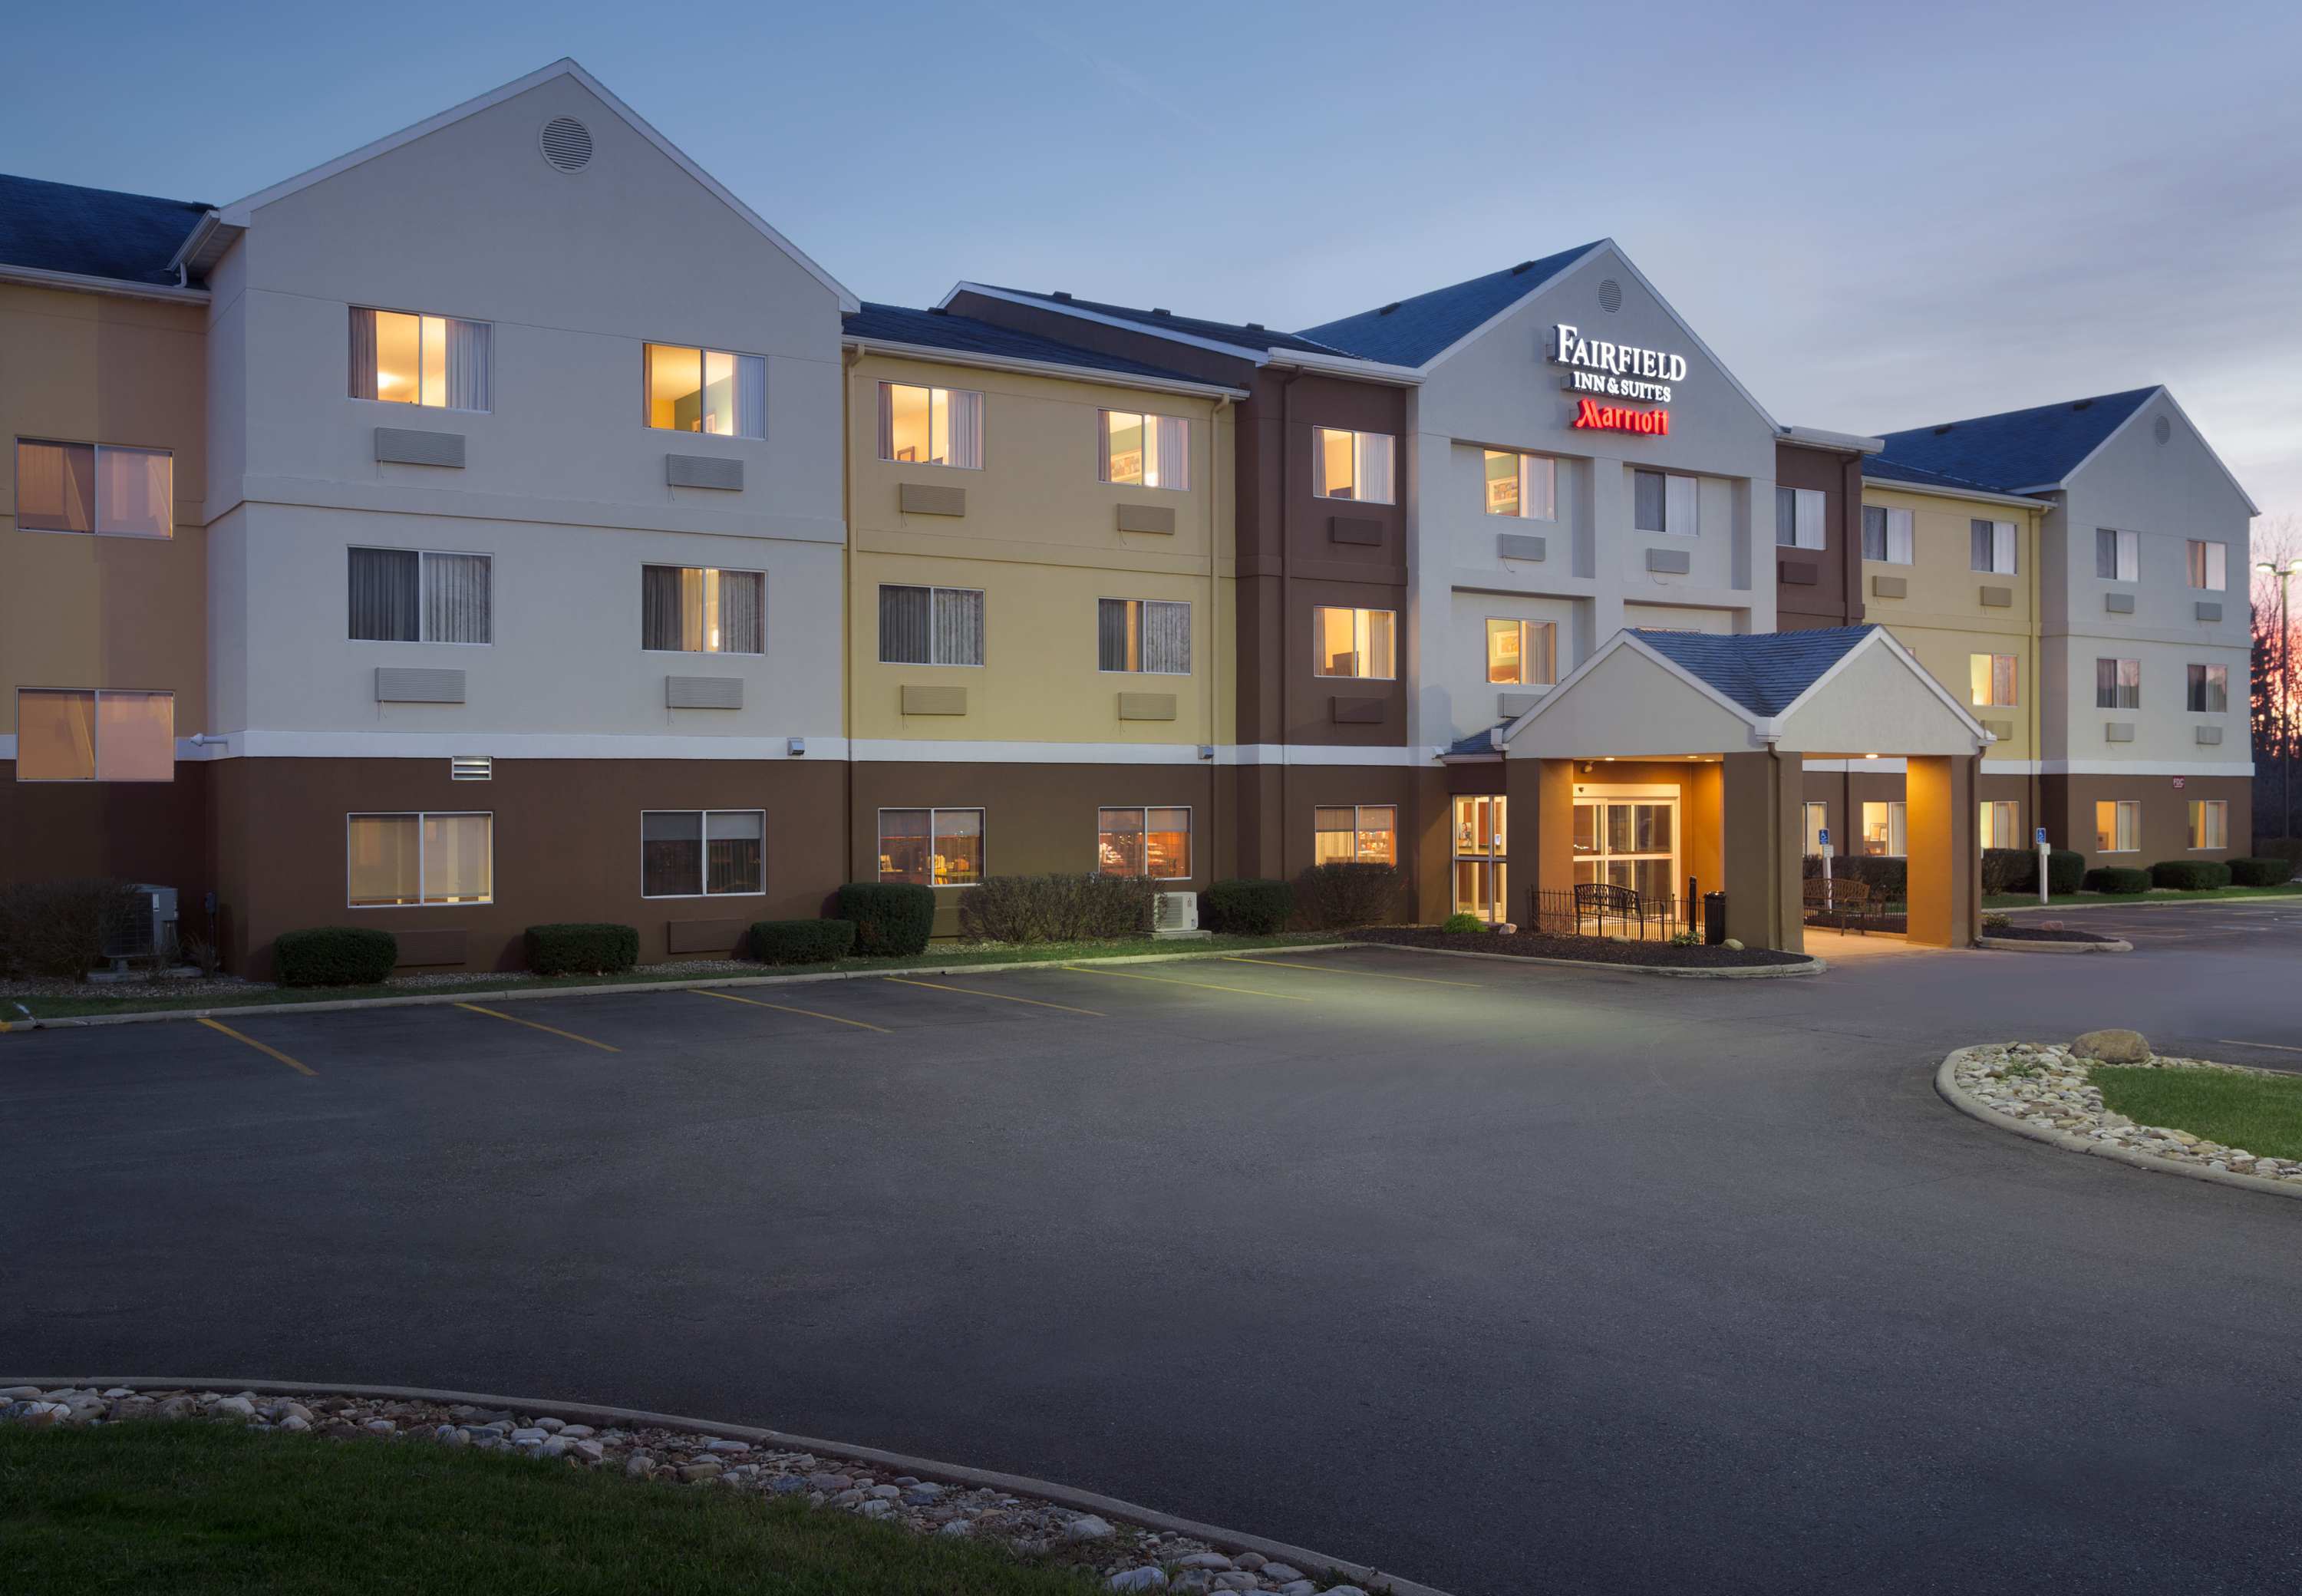 Photo of Fairfield Inn & Suites by Marriott Ontario Mansfield, Mansfield, OH